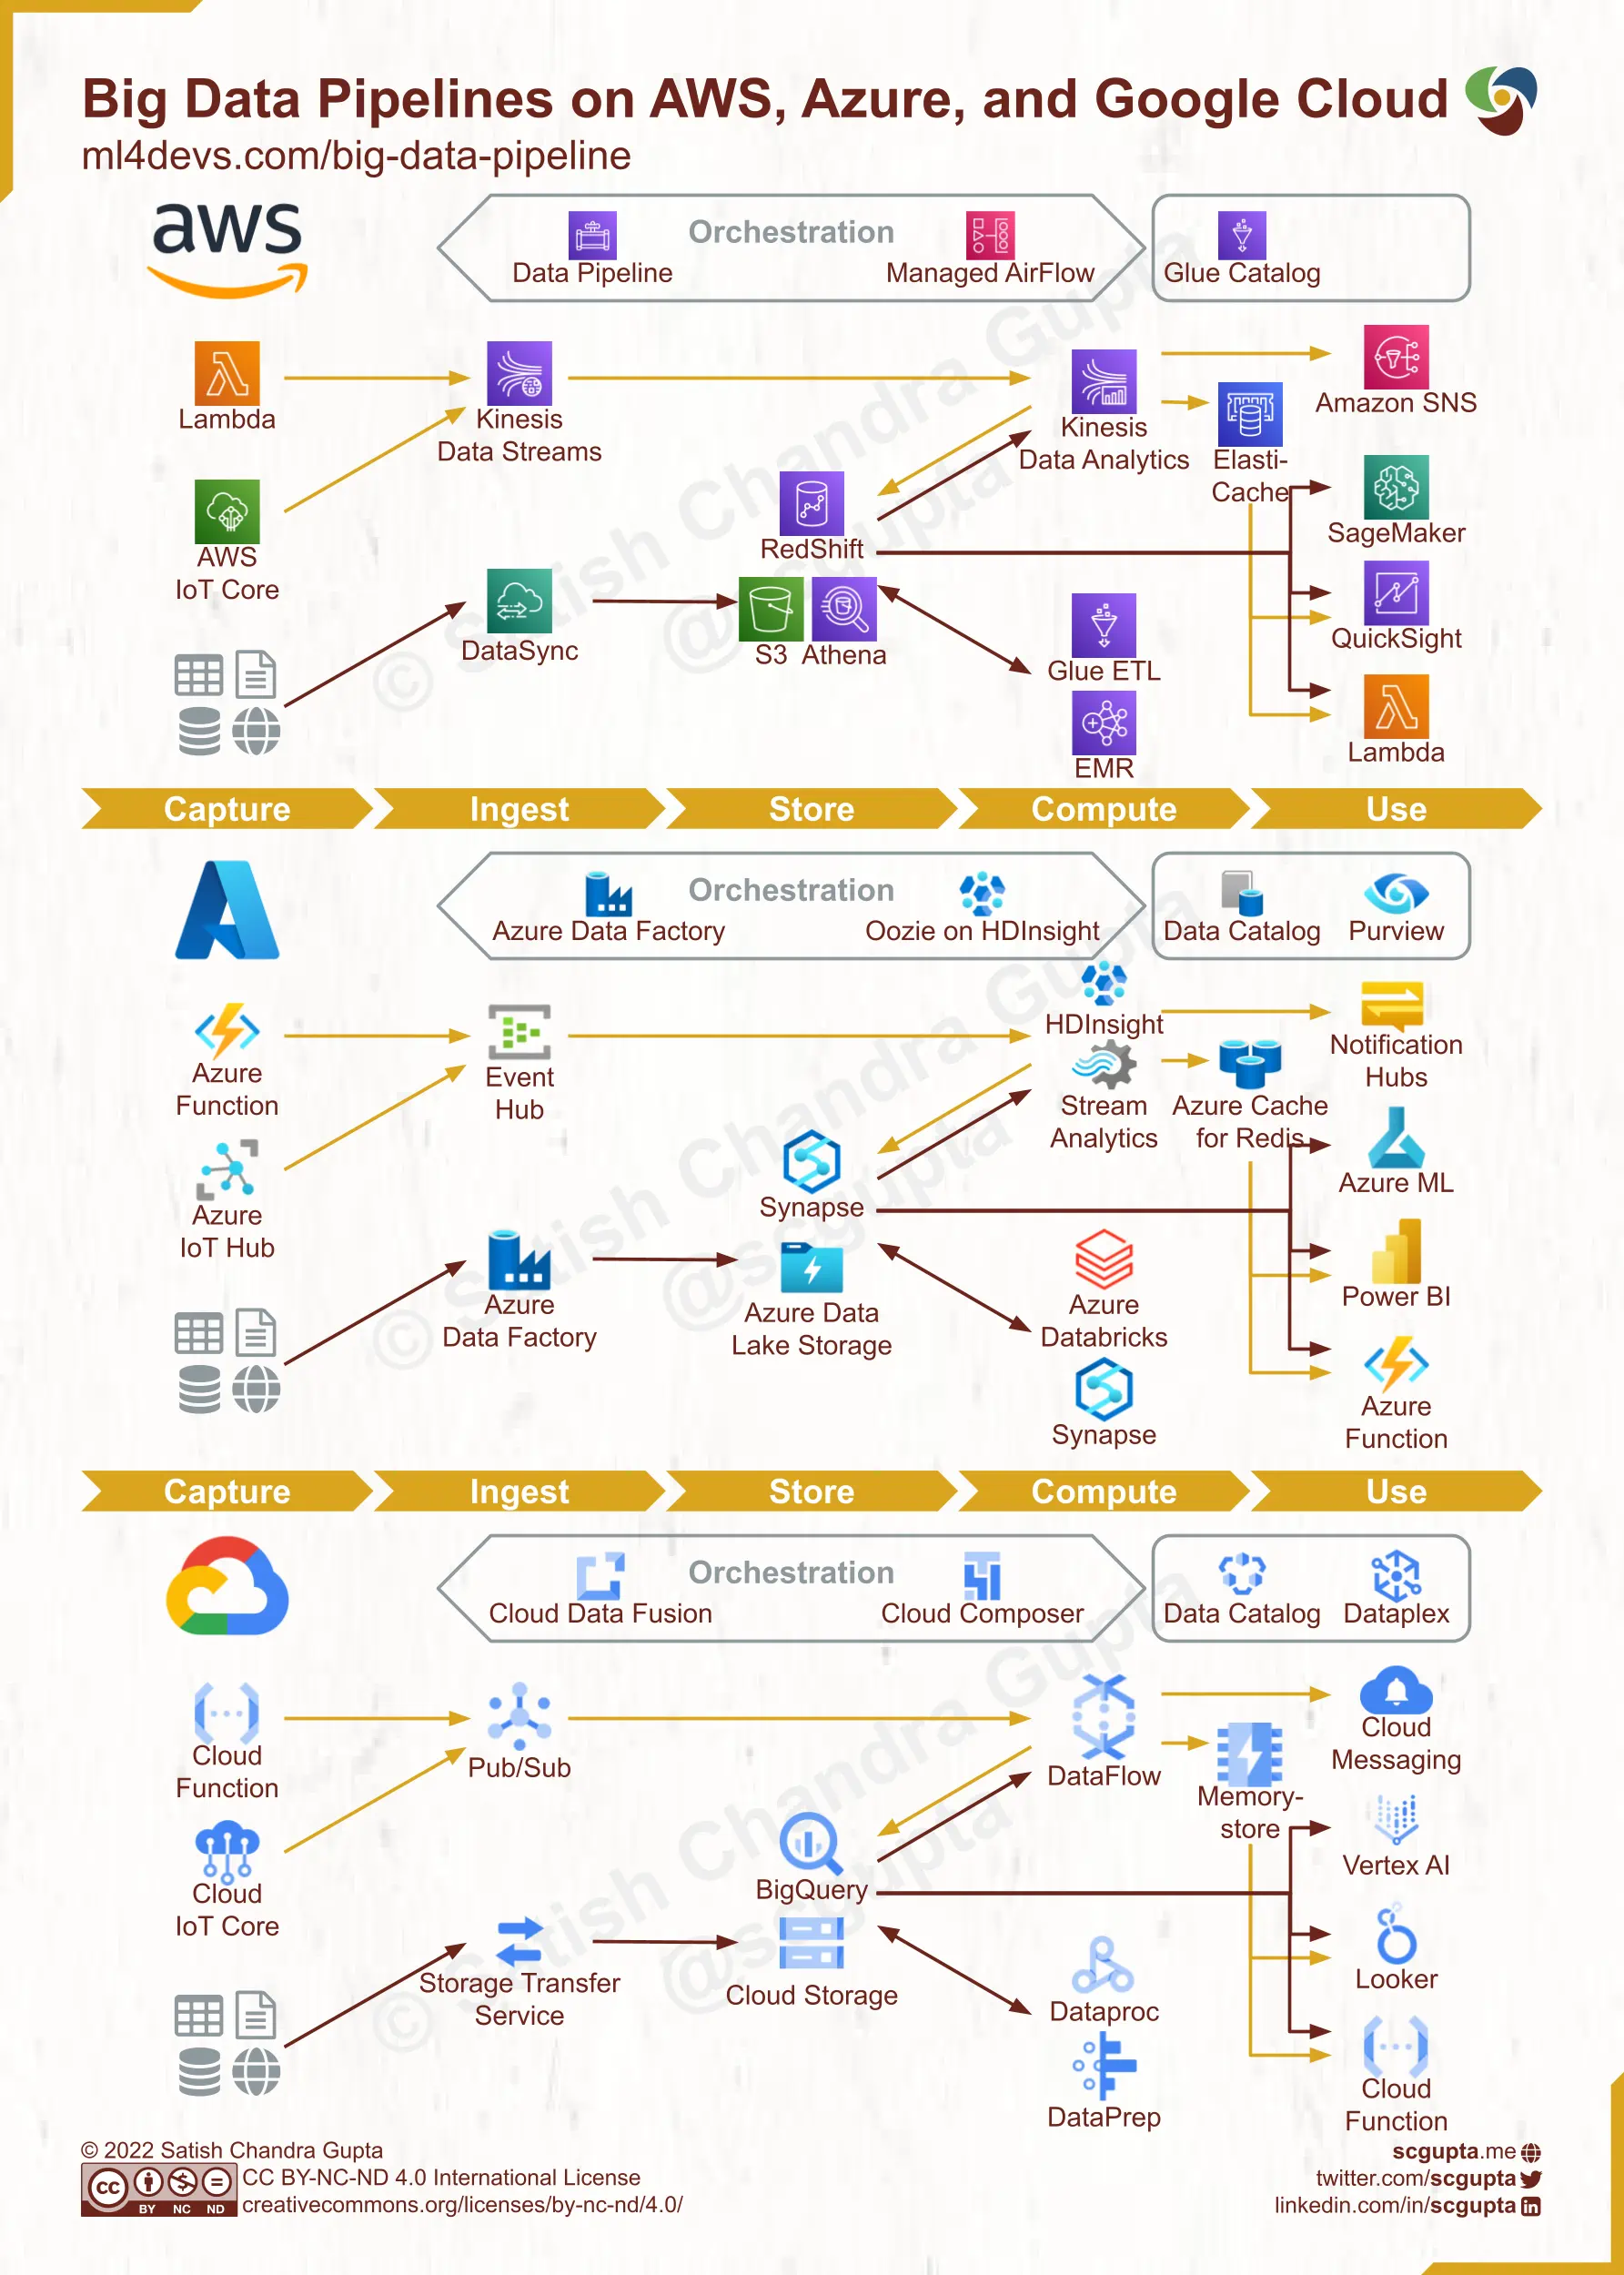 Cloud data pipelines on Amazon Web Services (AWS), Microsoft Azure, and Google Cloud Platform (GCP